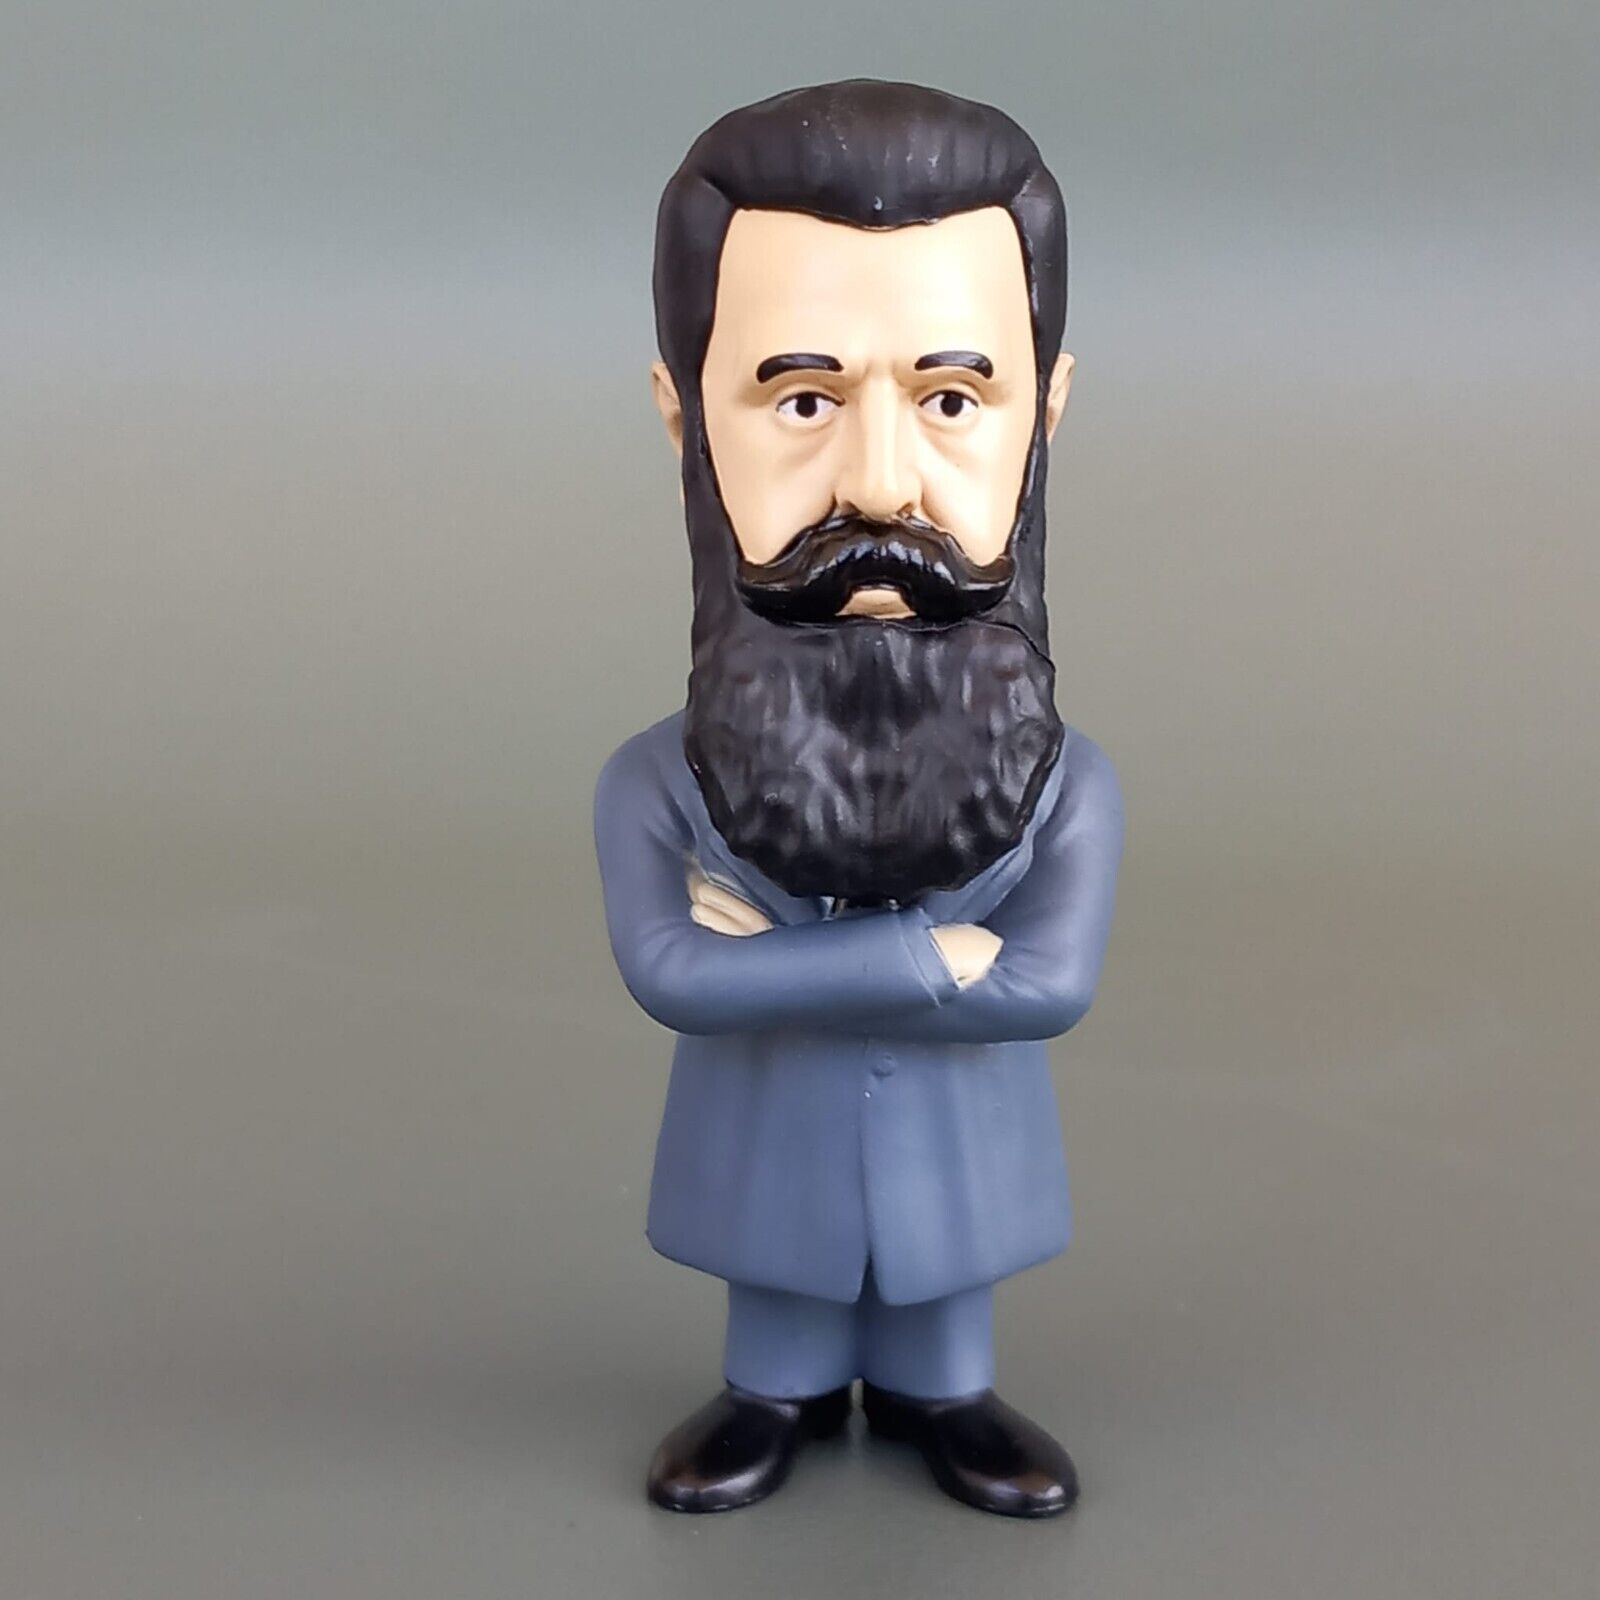 Theodor Herzl - 3D copy - height 8 cm - founder of Zionism